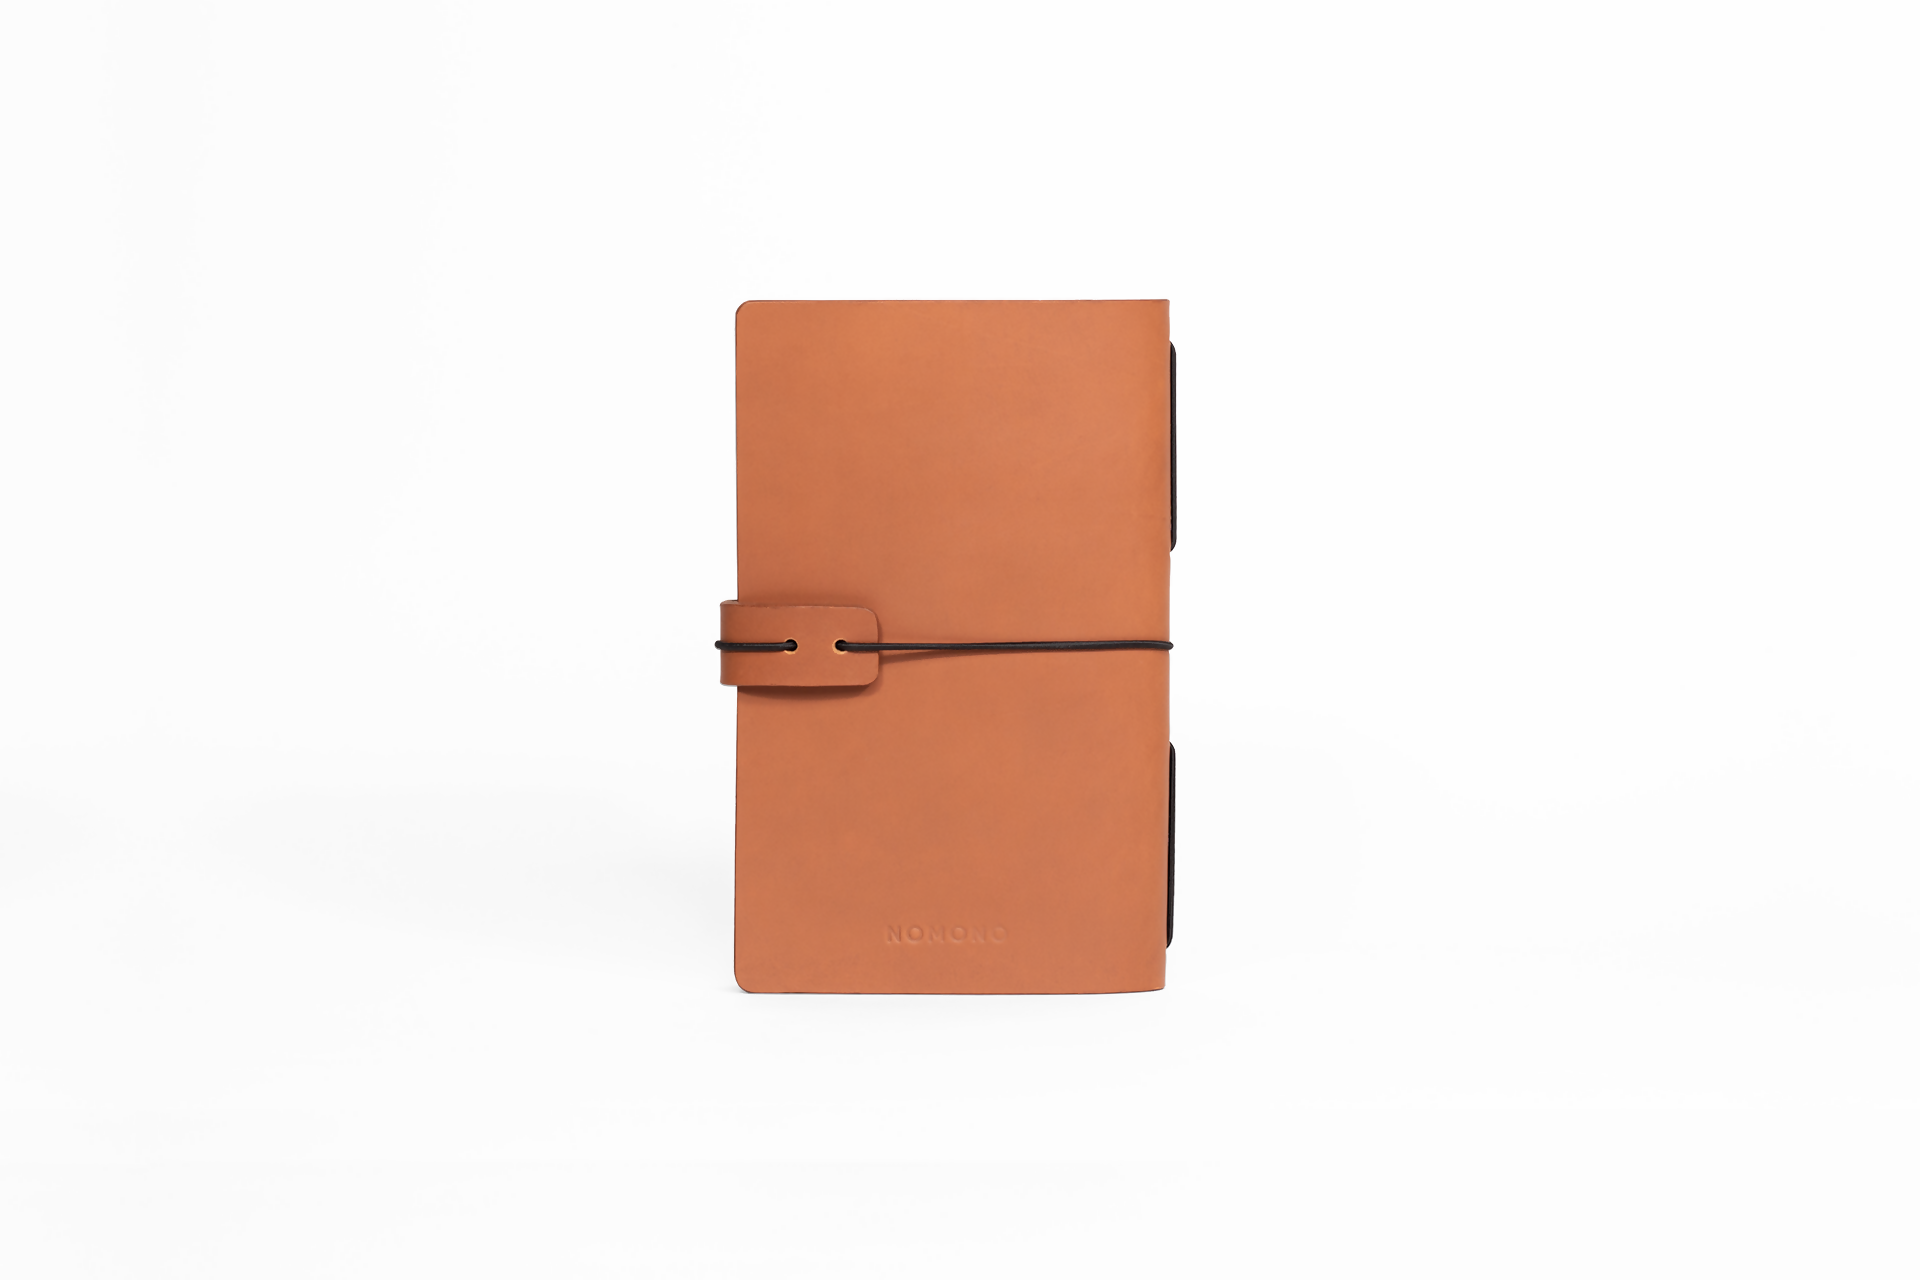 Traveler's notebook